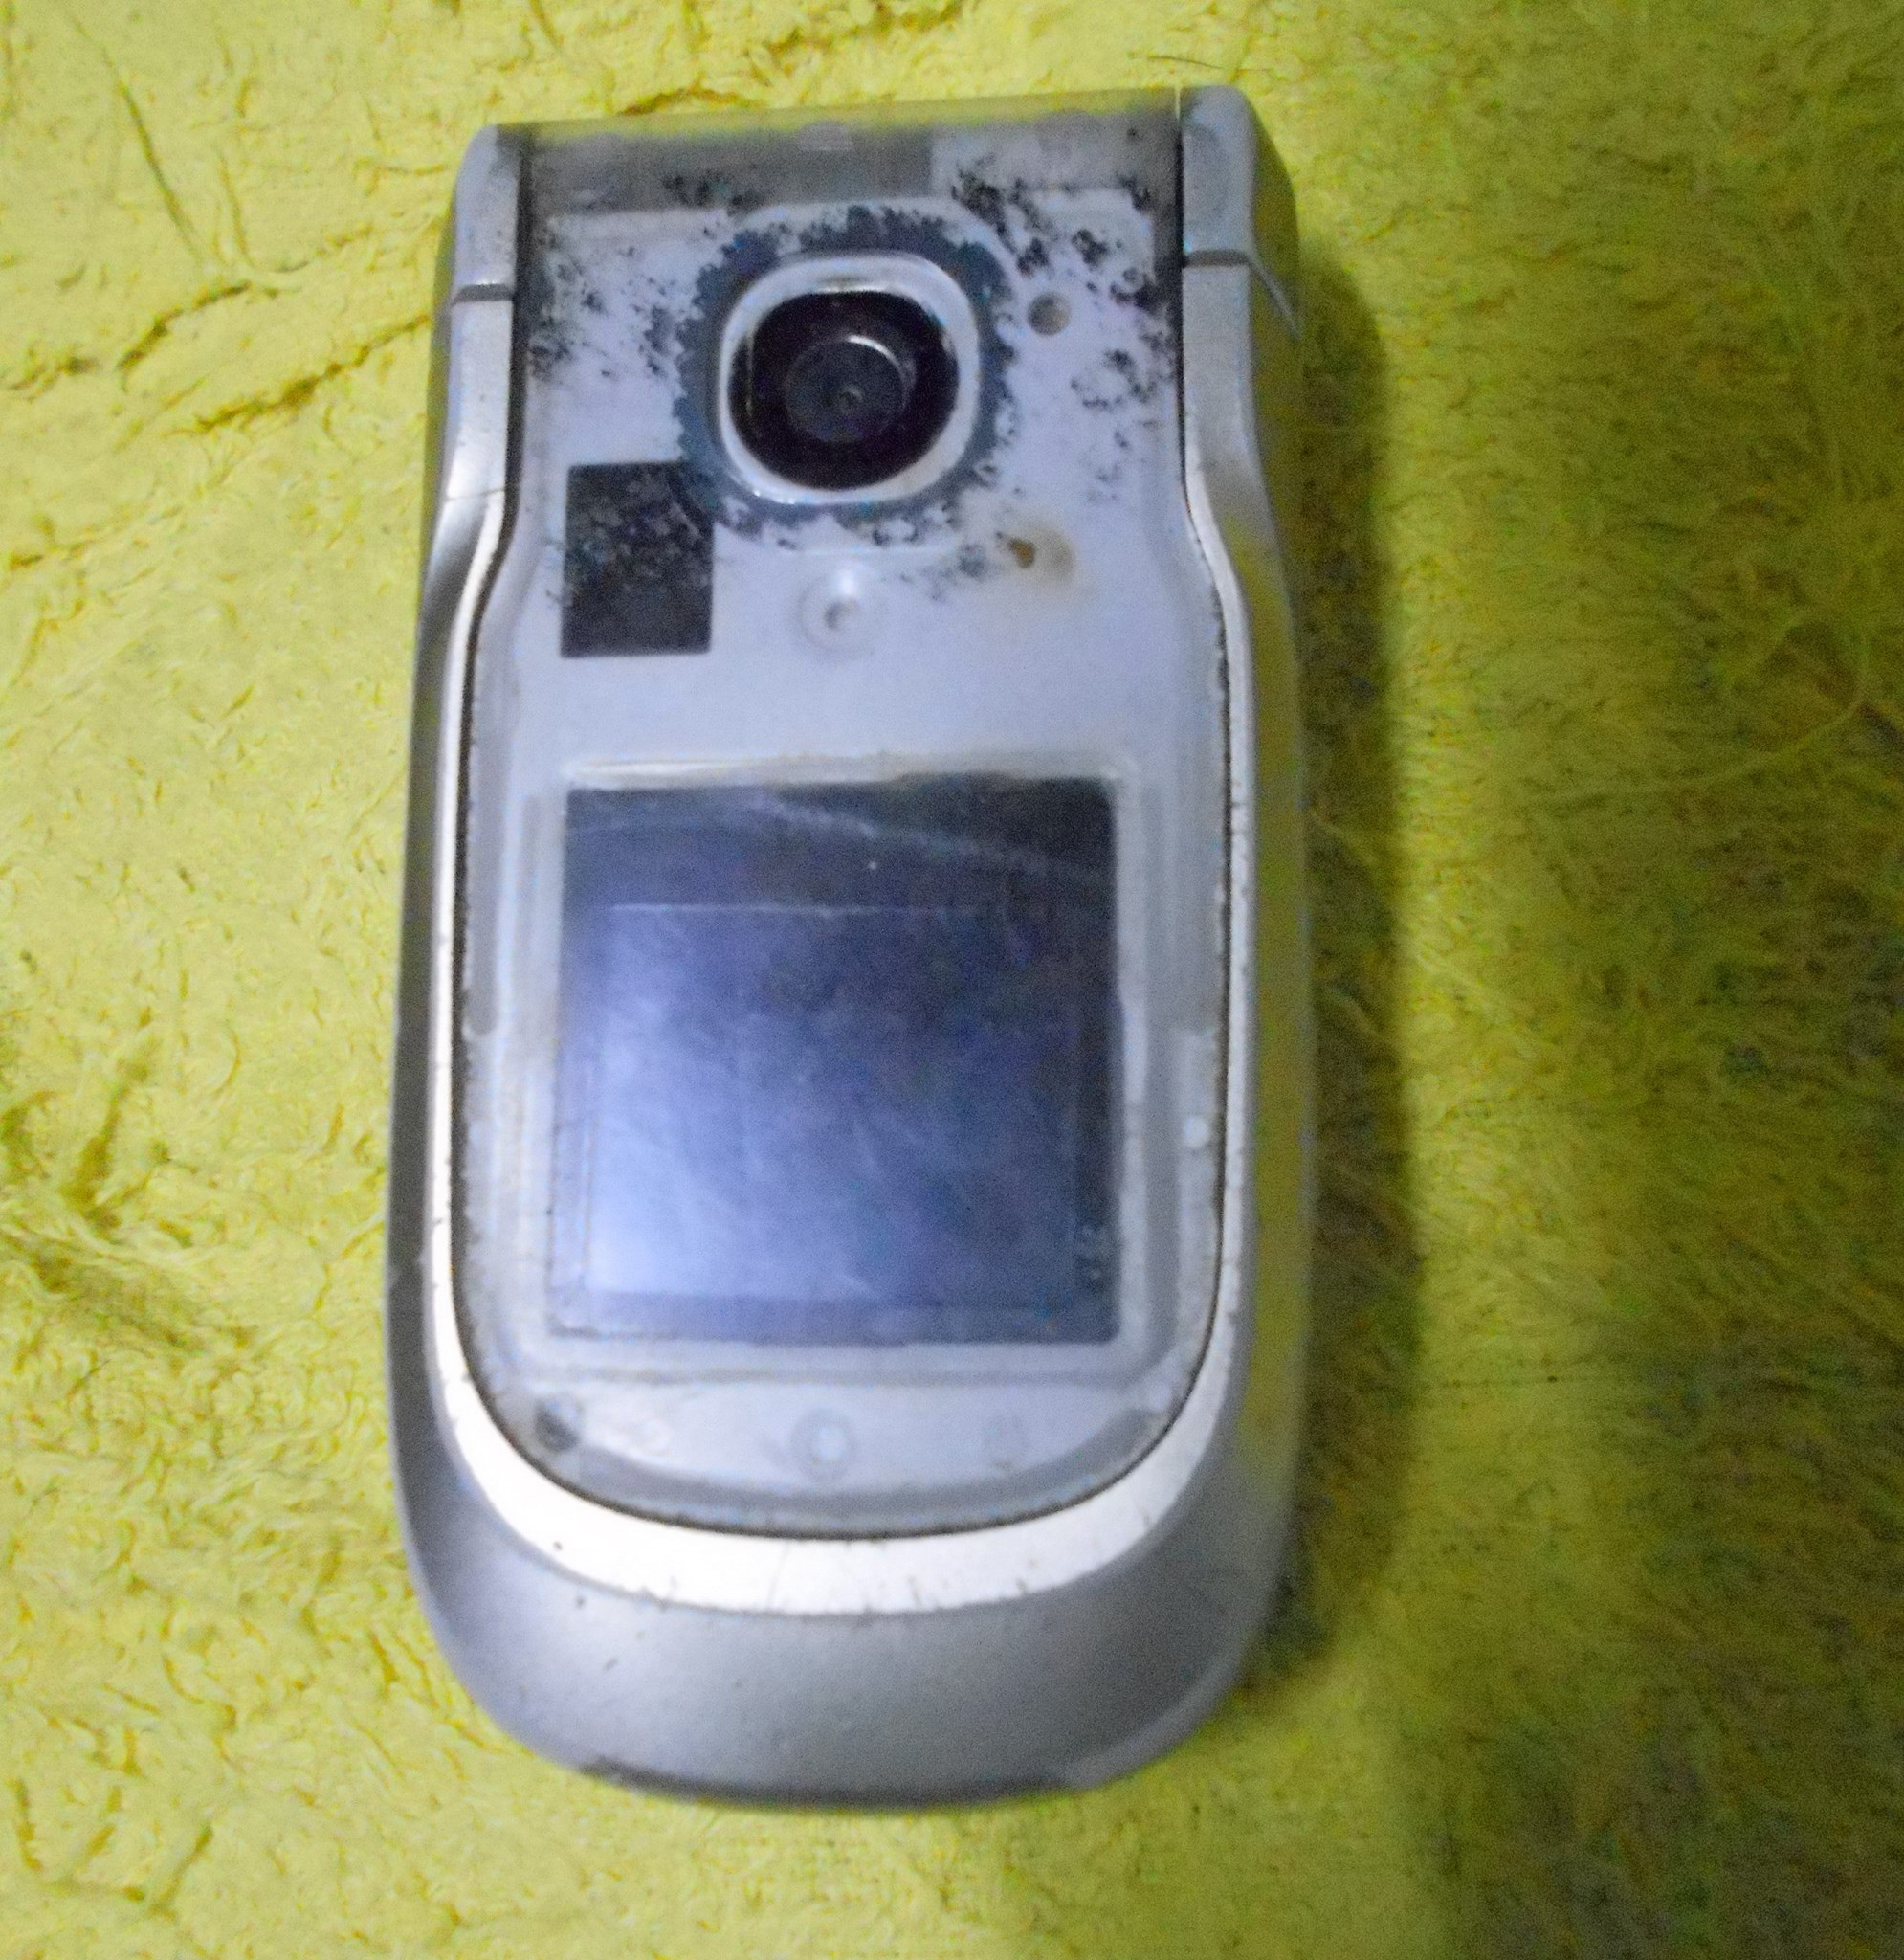 Gadget nostalgia in Vietnam: My trusty Nokia